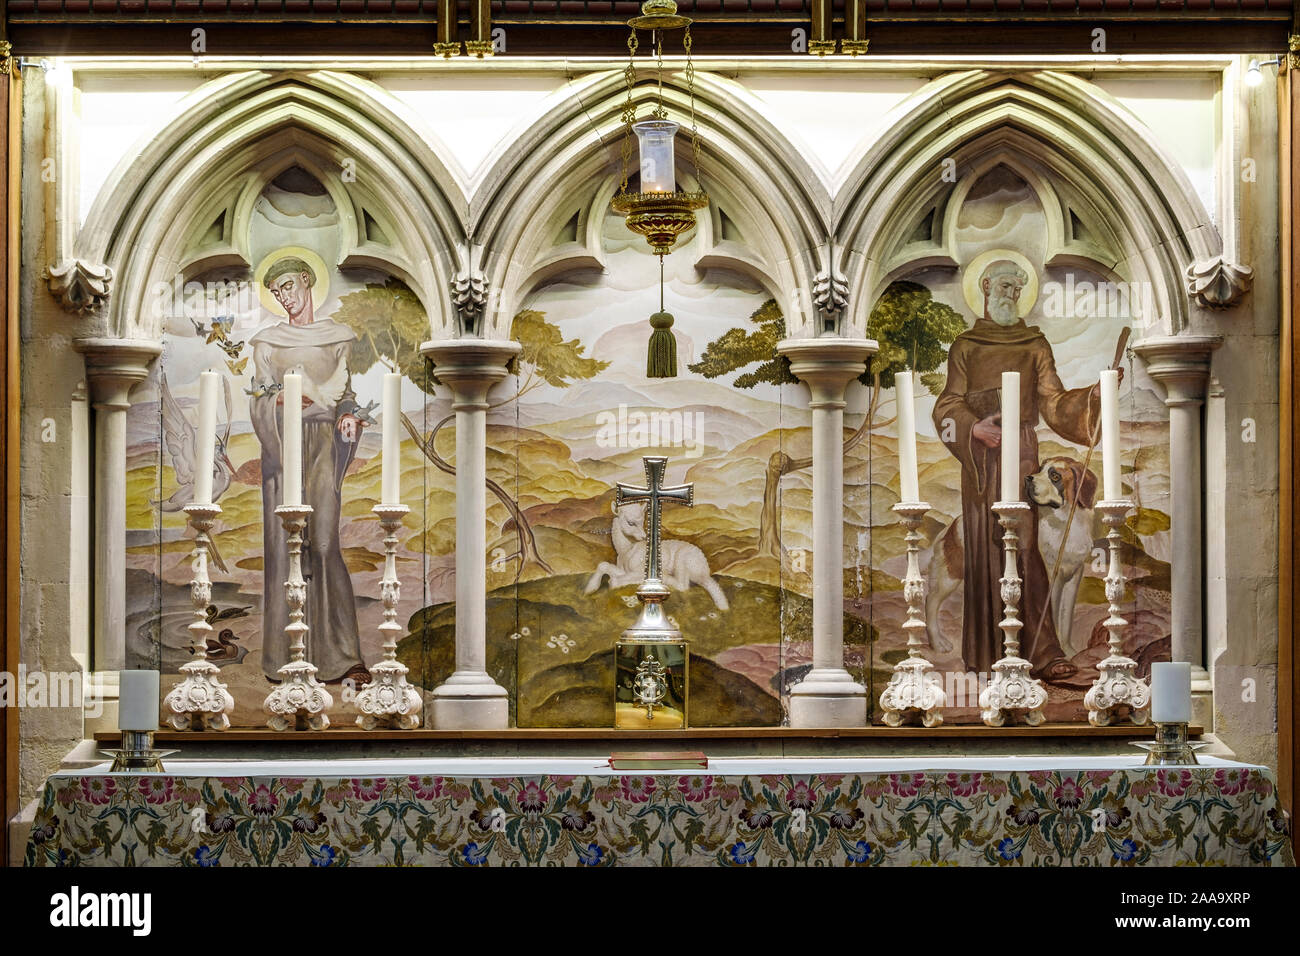 Altar at The King's Chapel, Main Street, Gibraltar. Stock Photo